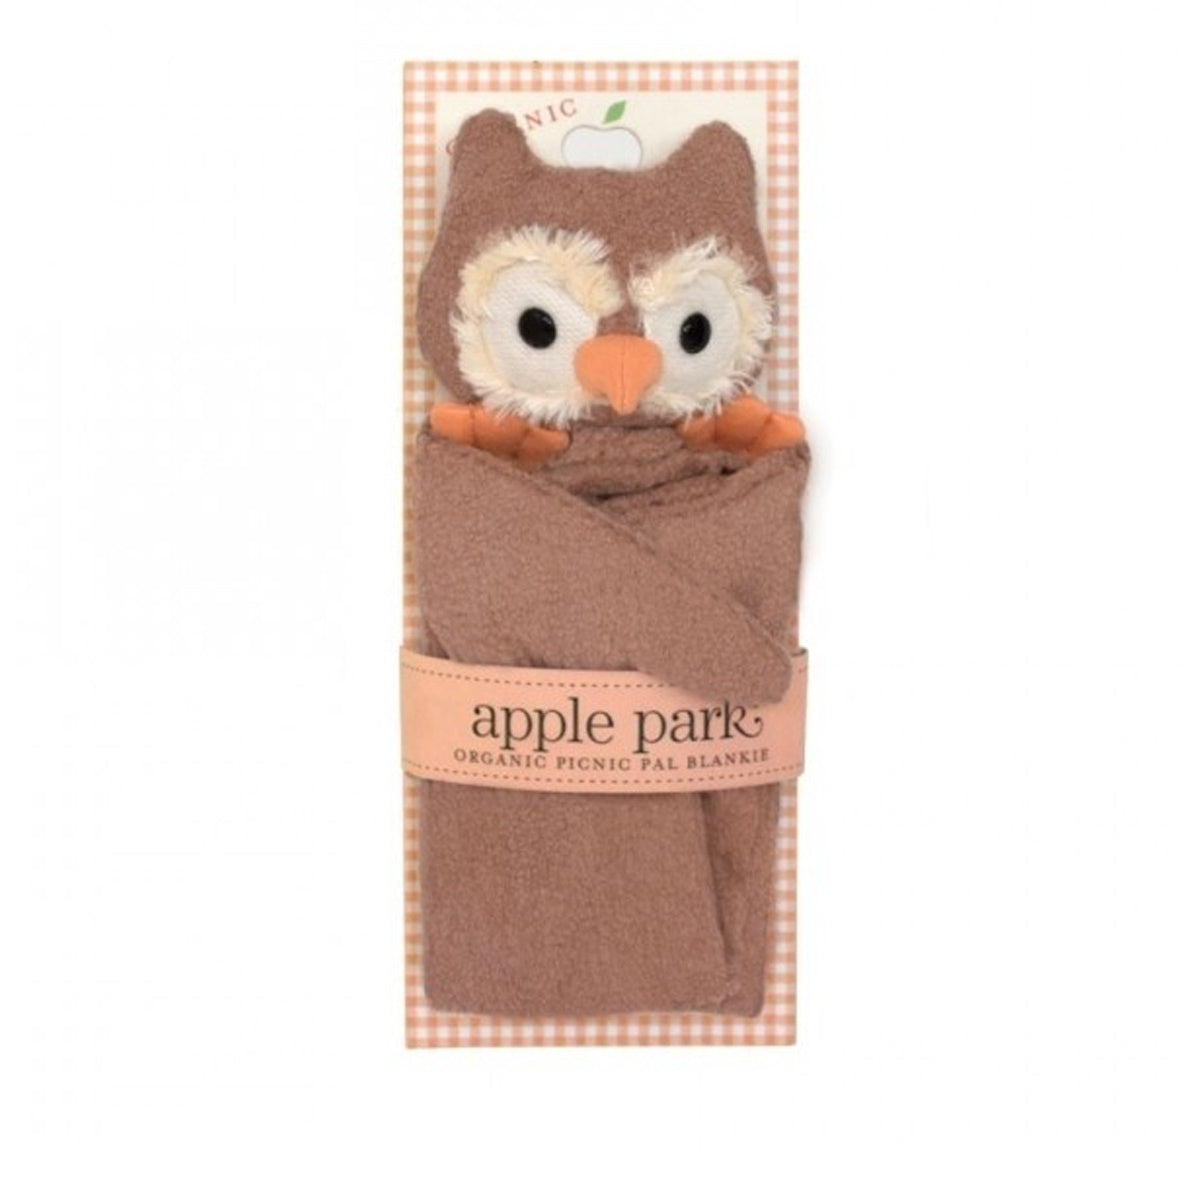 Apple Park - Owl Blankie